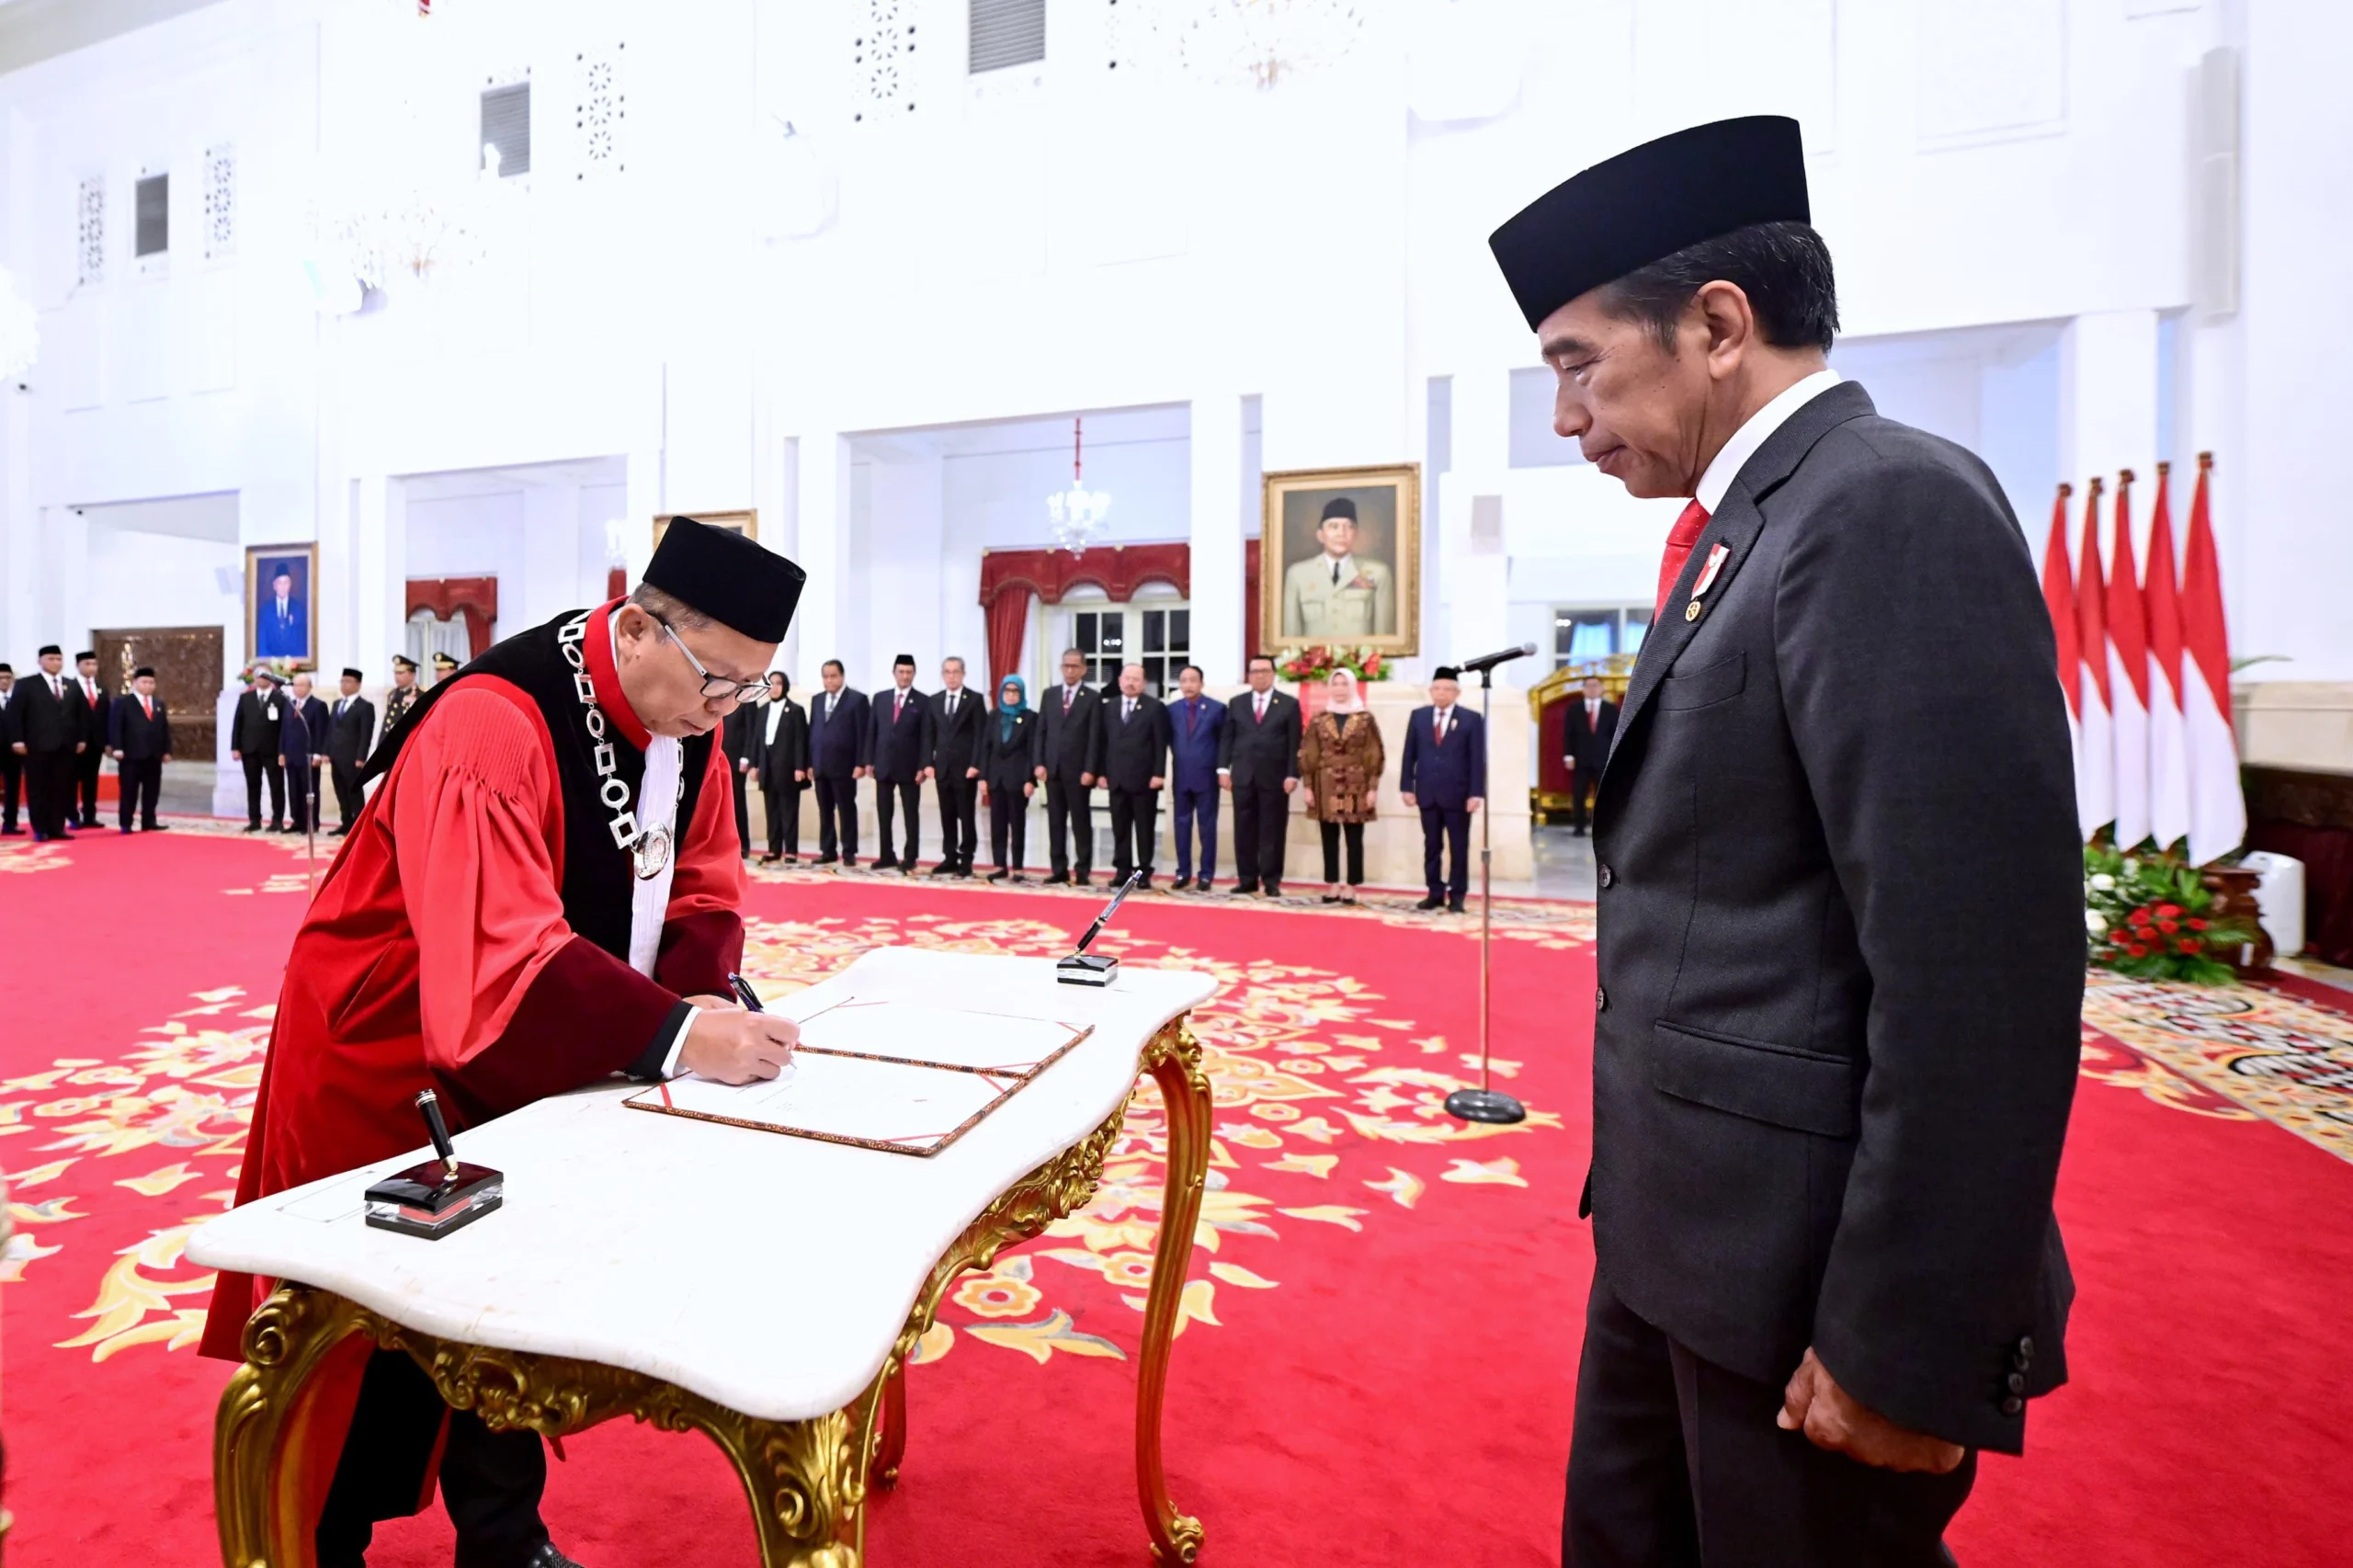 Jokowi Resmi Lantik Arsul Sani Jadi Hakim MK, Berikut Profilnya